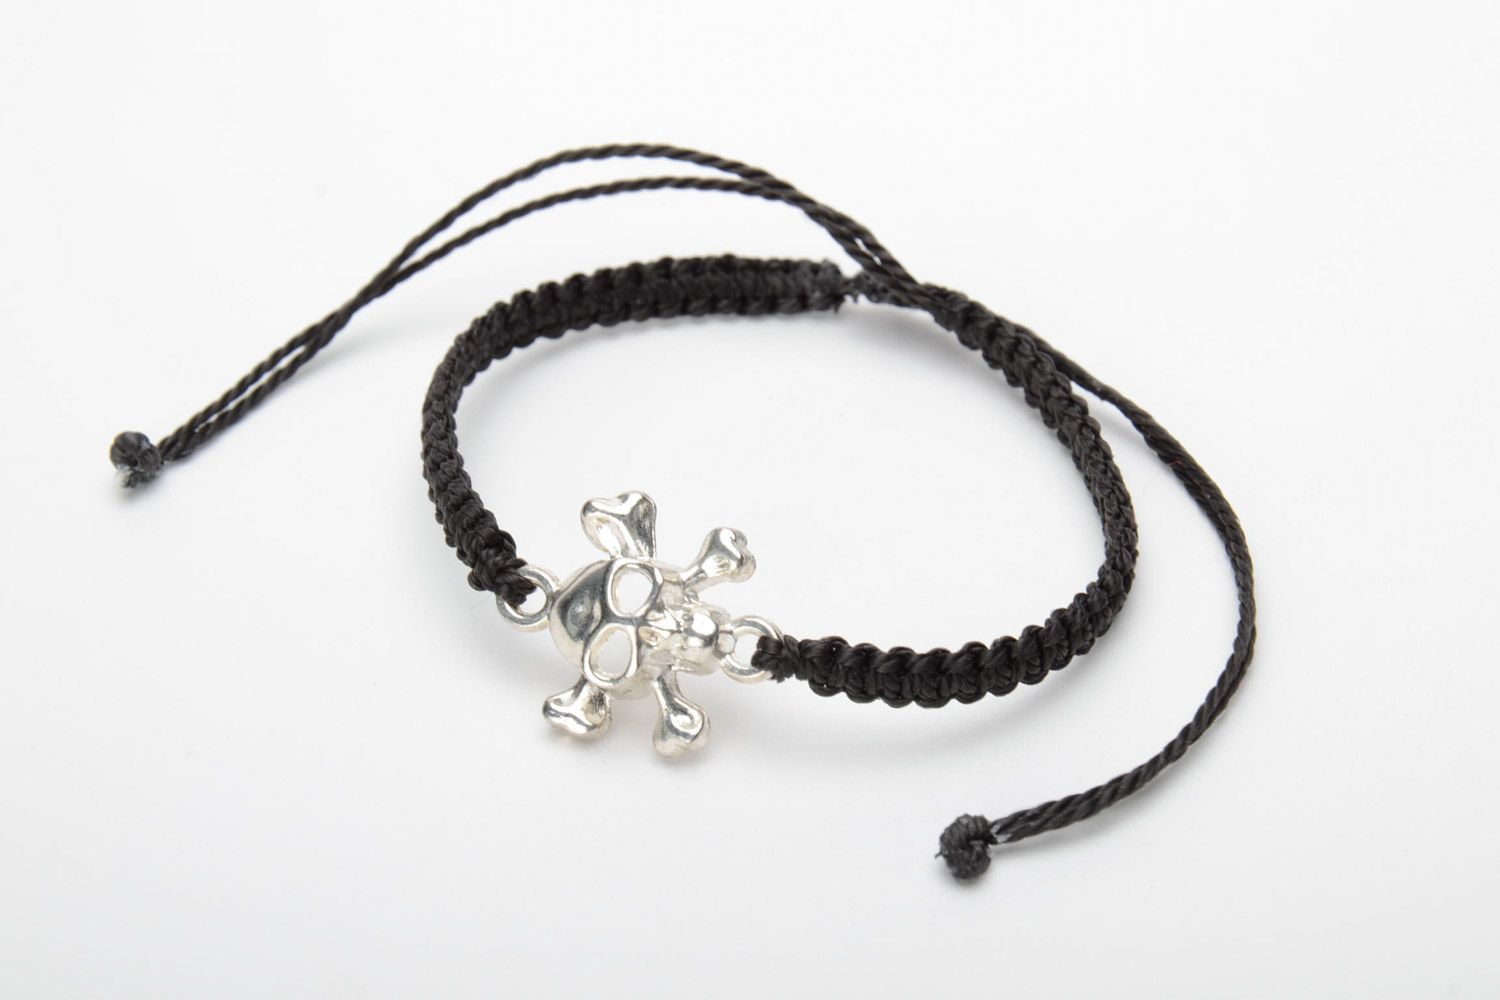 Handmade black woven capron thread wrist bracelet with metal charm in the shape of skull photo 3